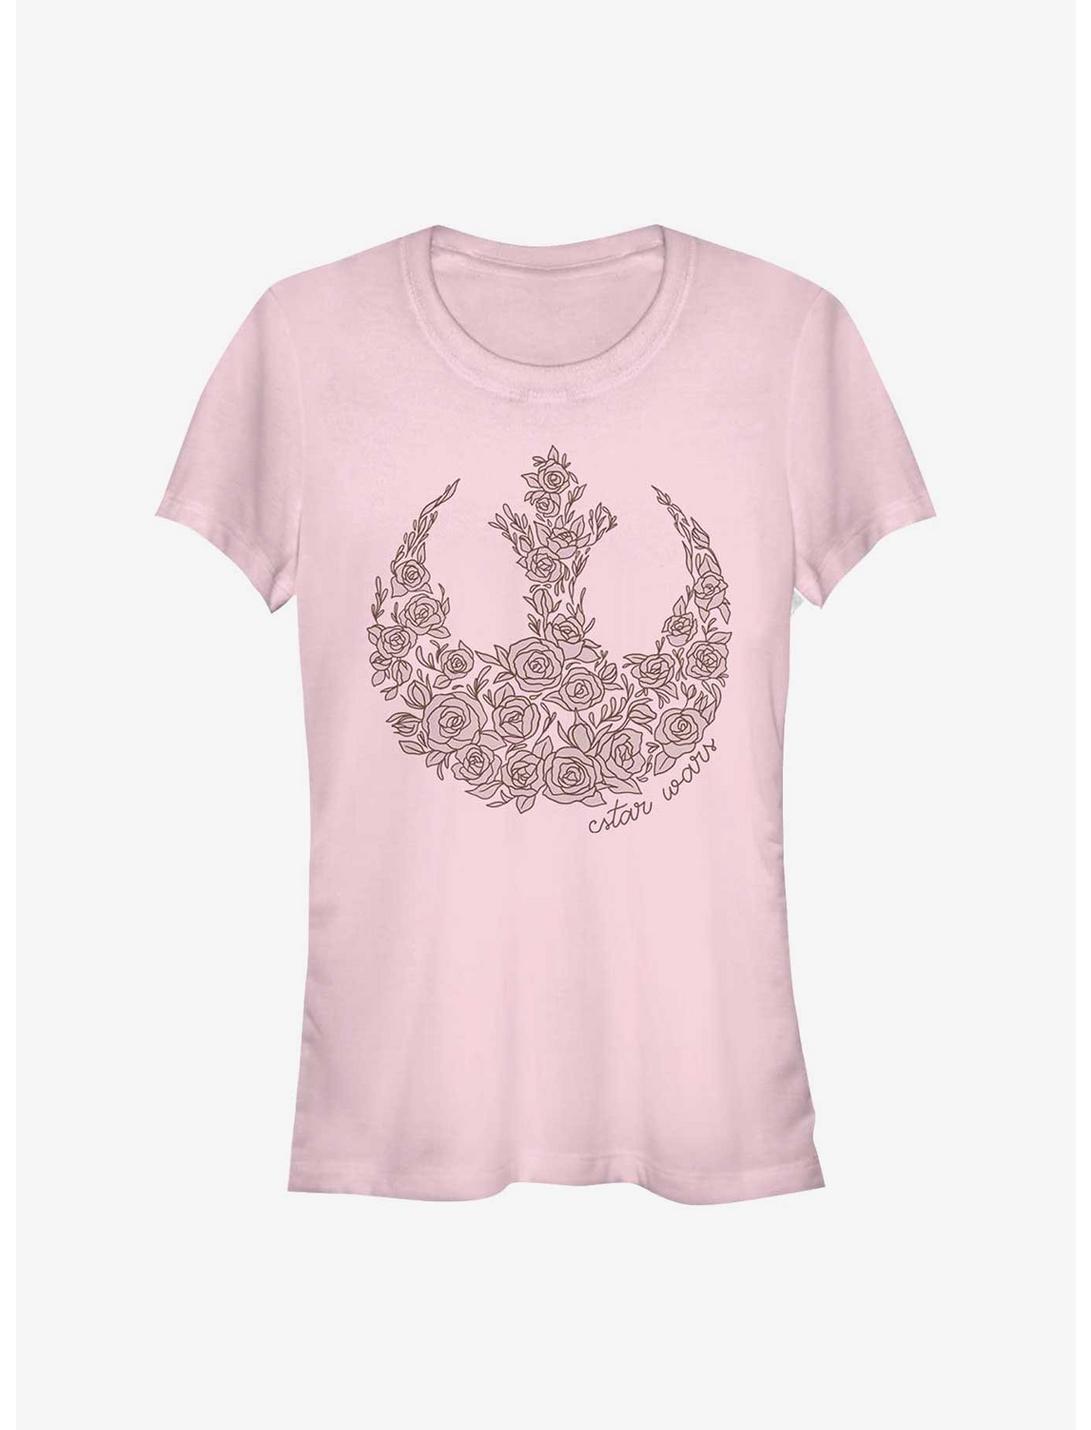 Star Wars Rose Rebel Girls T-Shirt, LIGHT PINK, hi-res